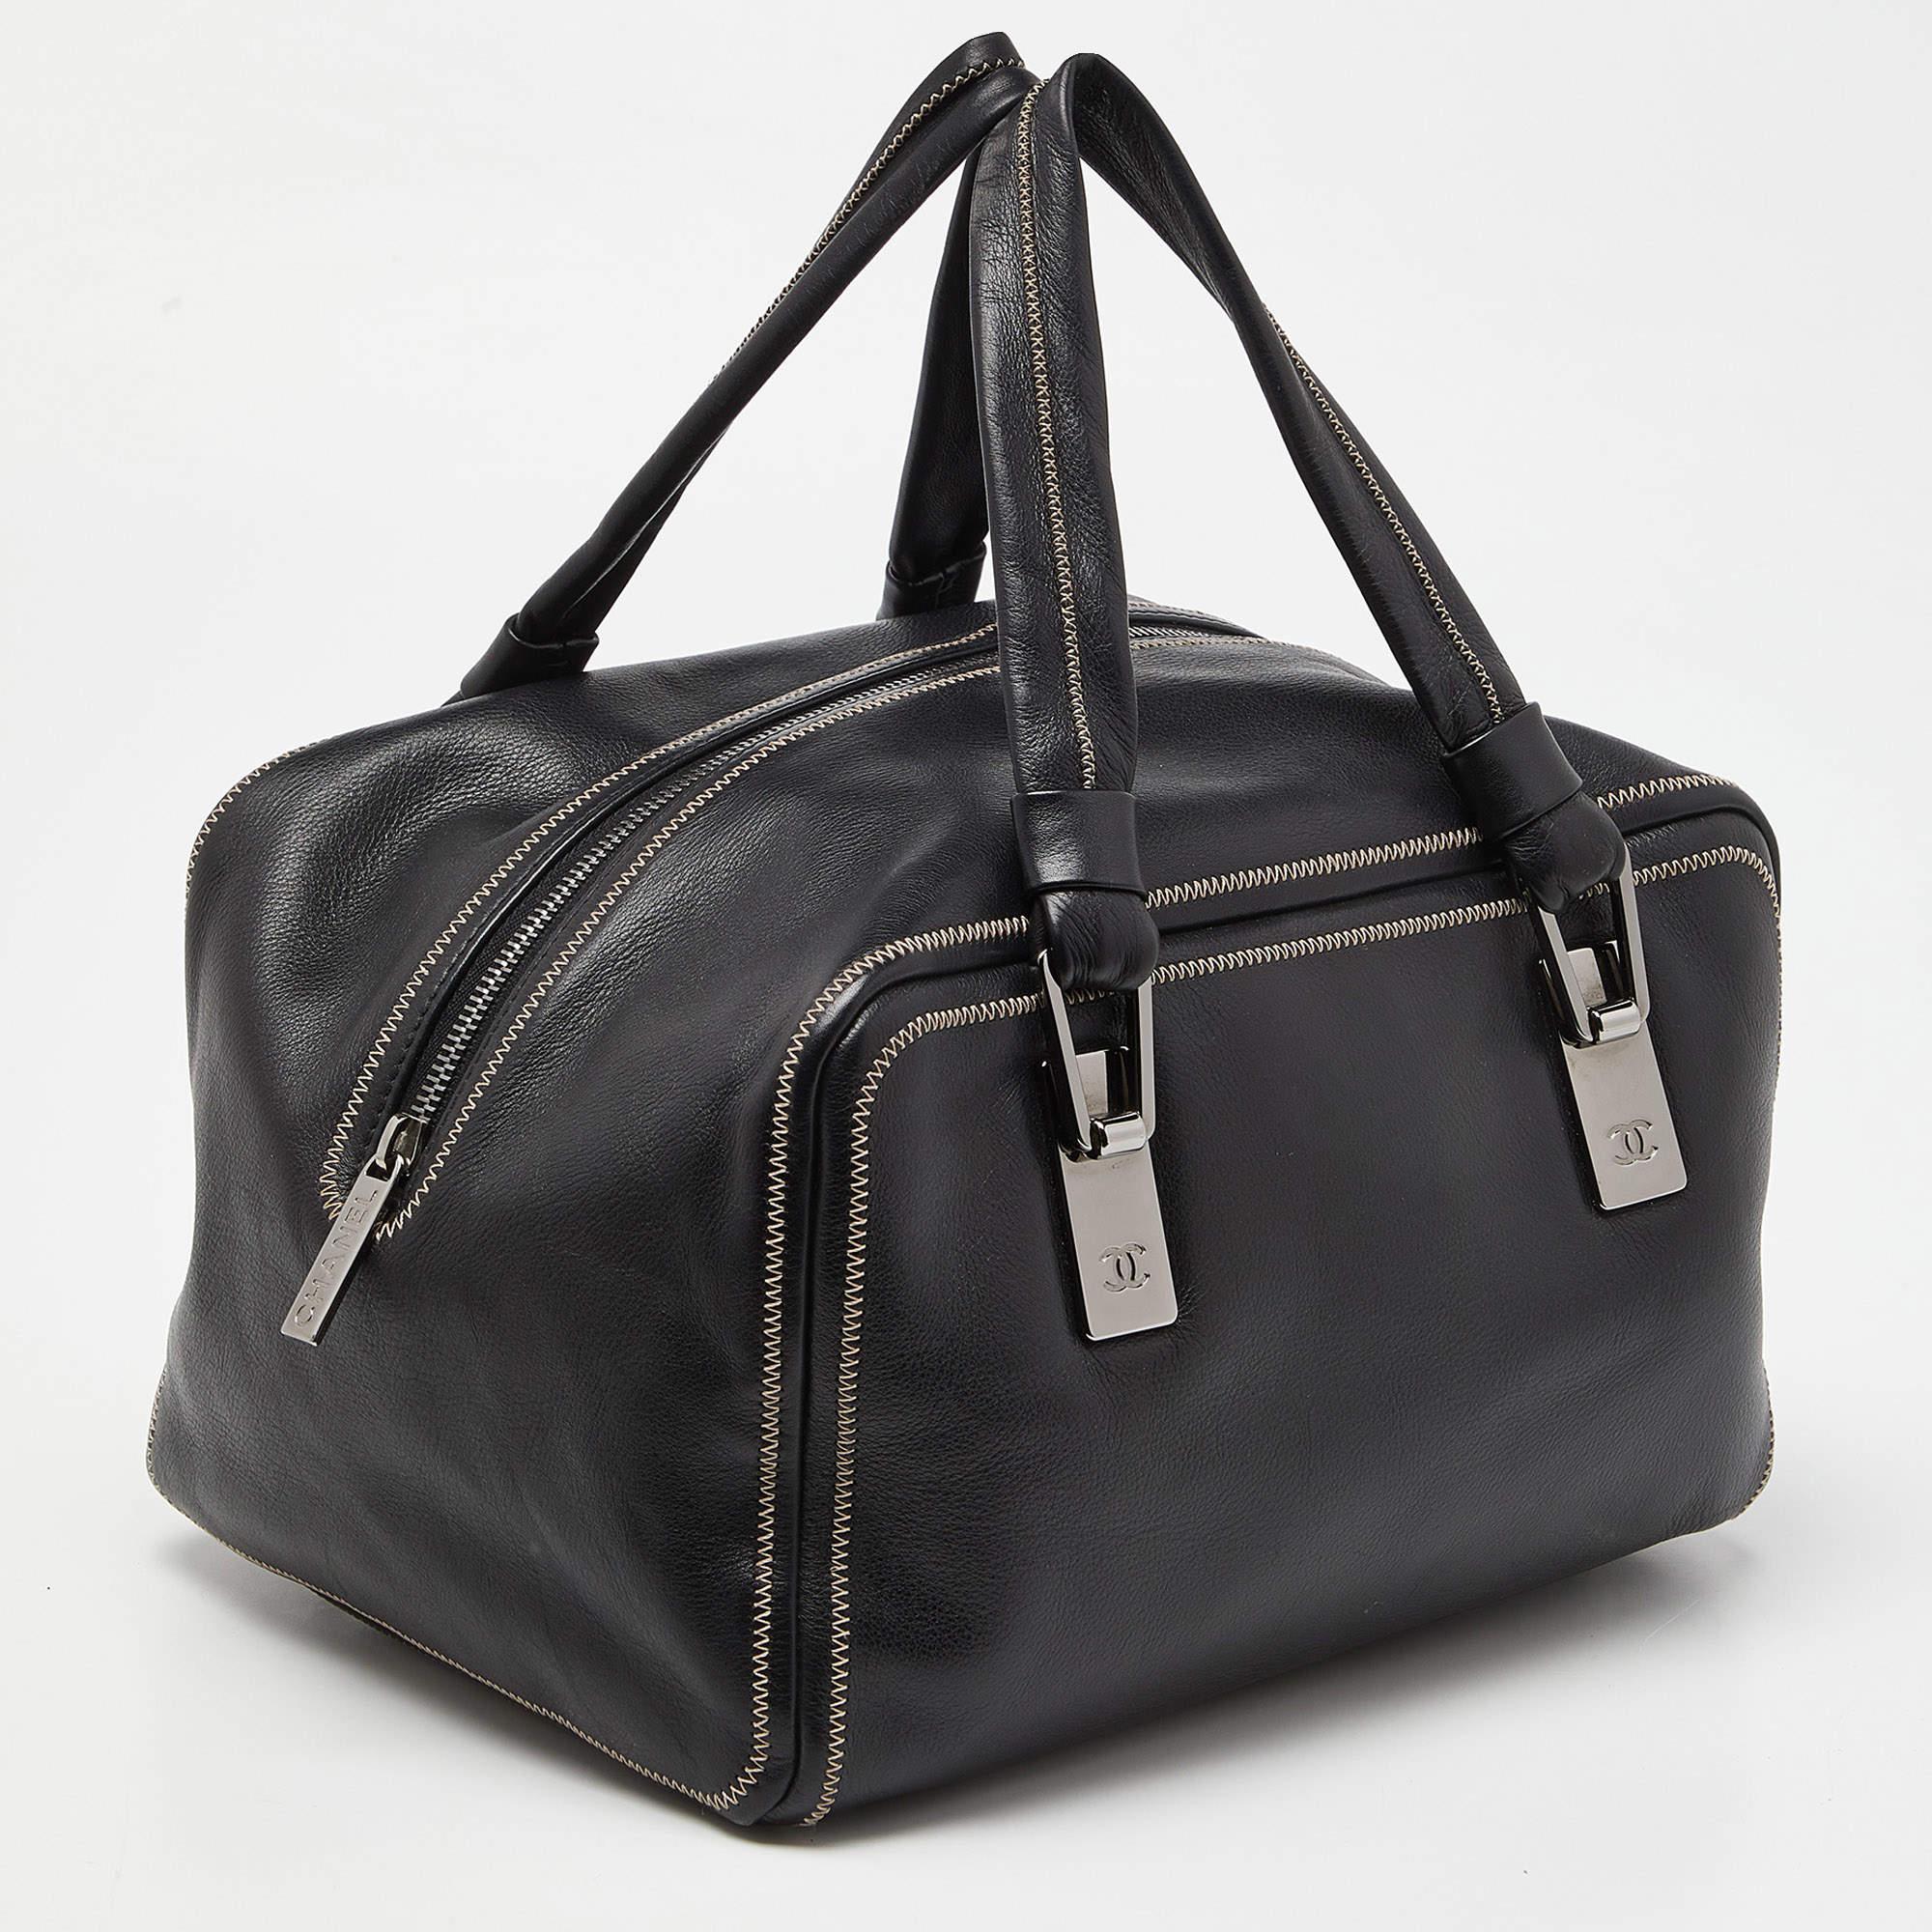 Chanel Black Leather CC Bowler Bag In Good Condition For Sale In Dubai, Al Qouz 2